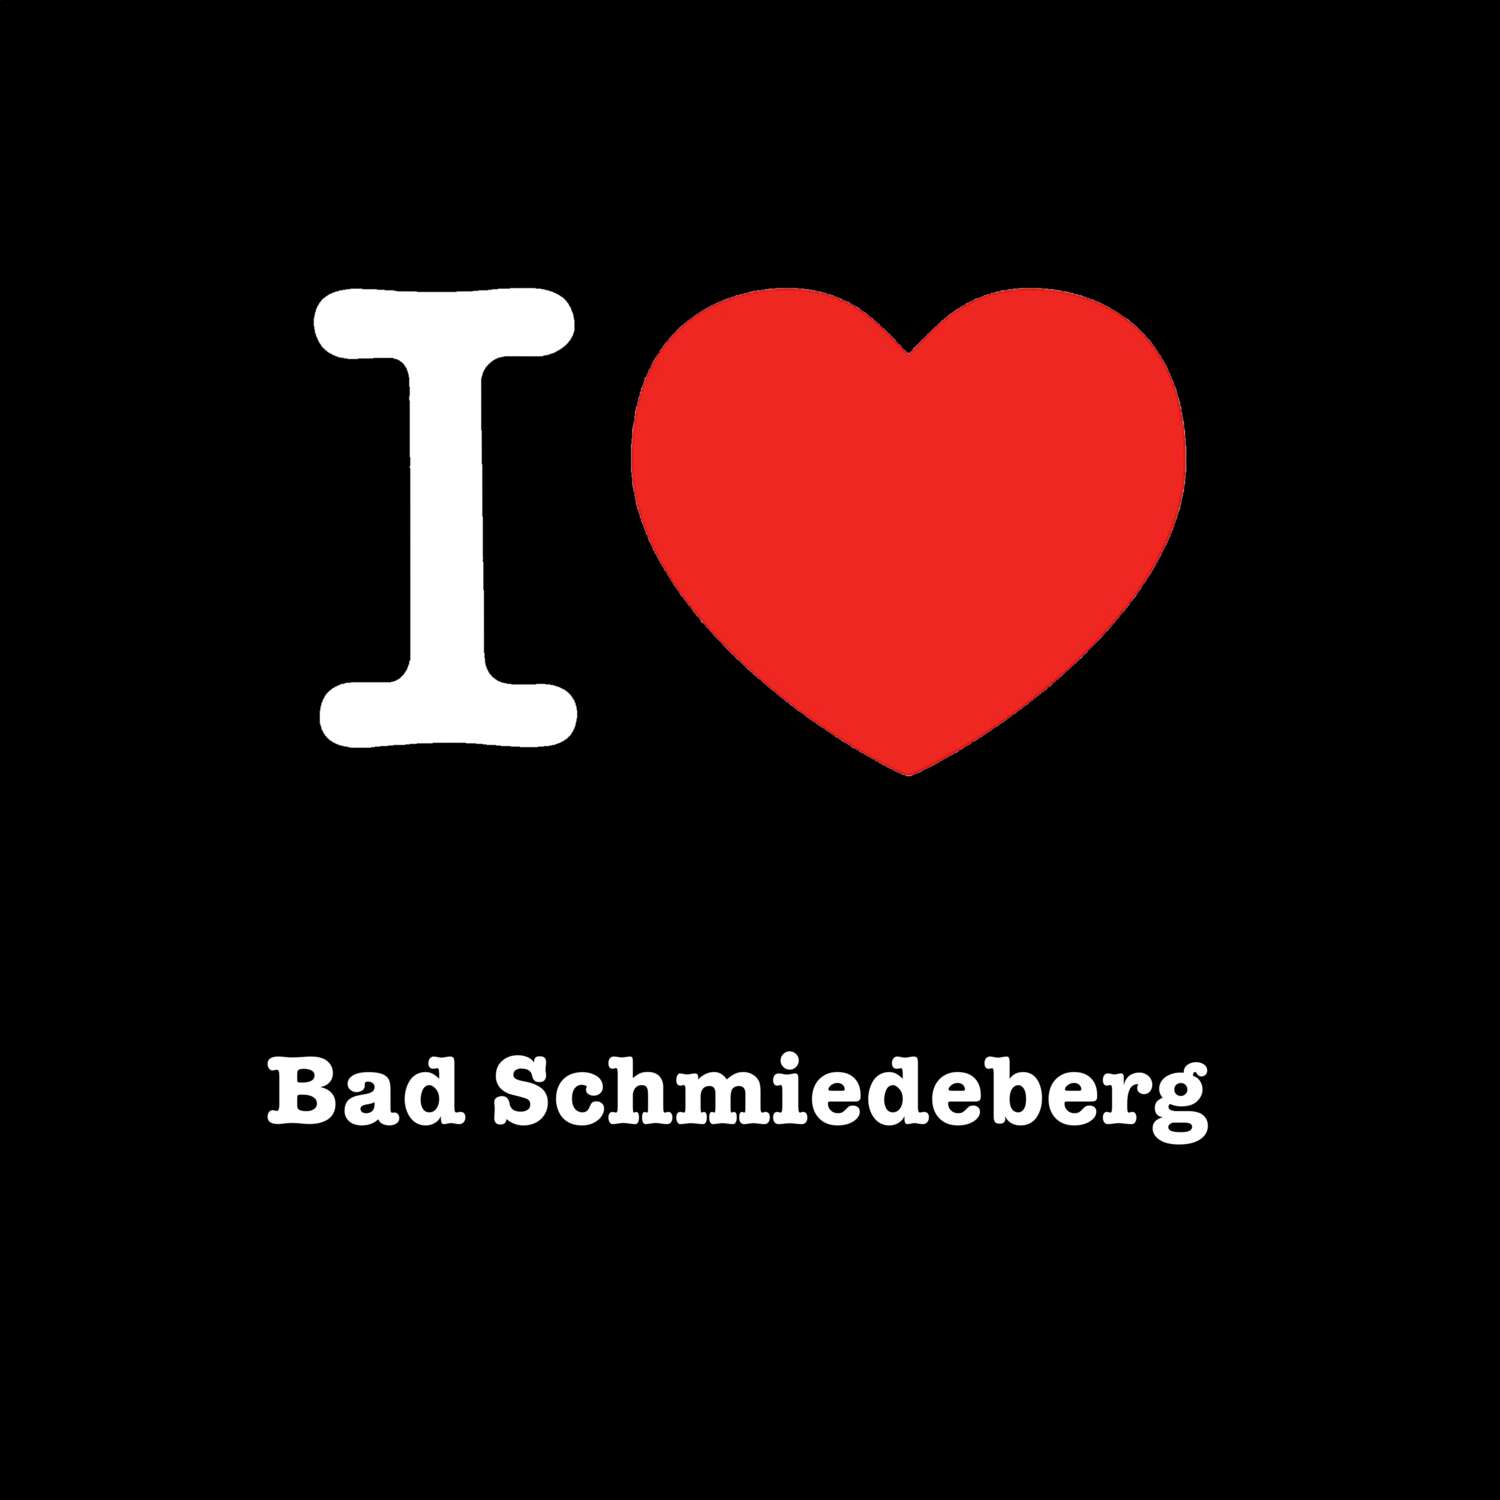 Bad Schmiedeberg T-Shirt »I love«